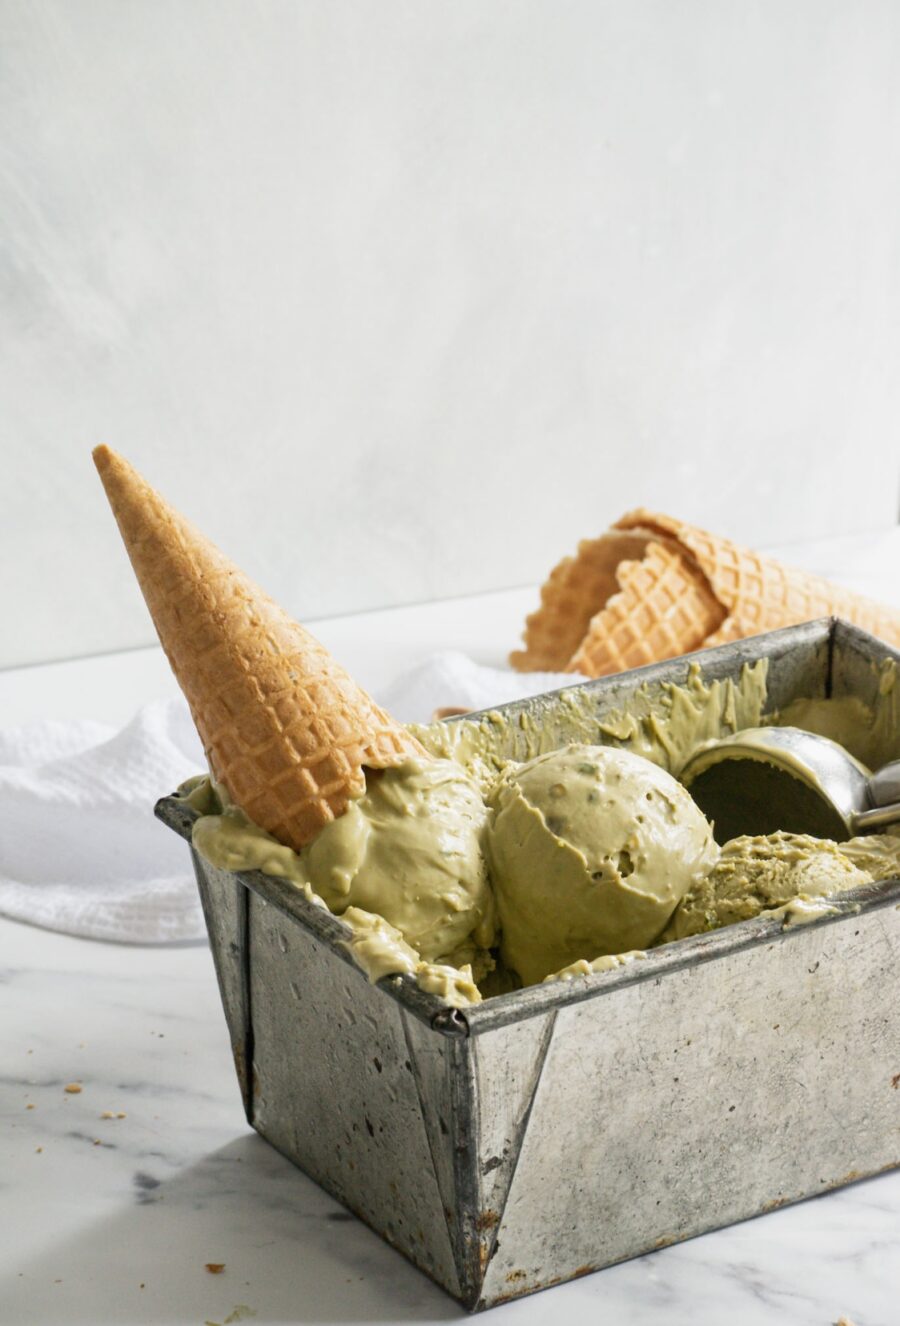 Pistachio no-churn ice cream